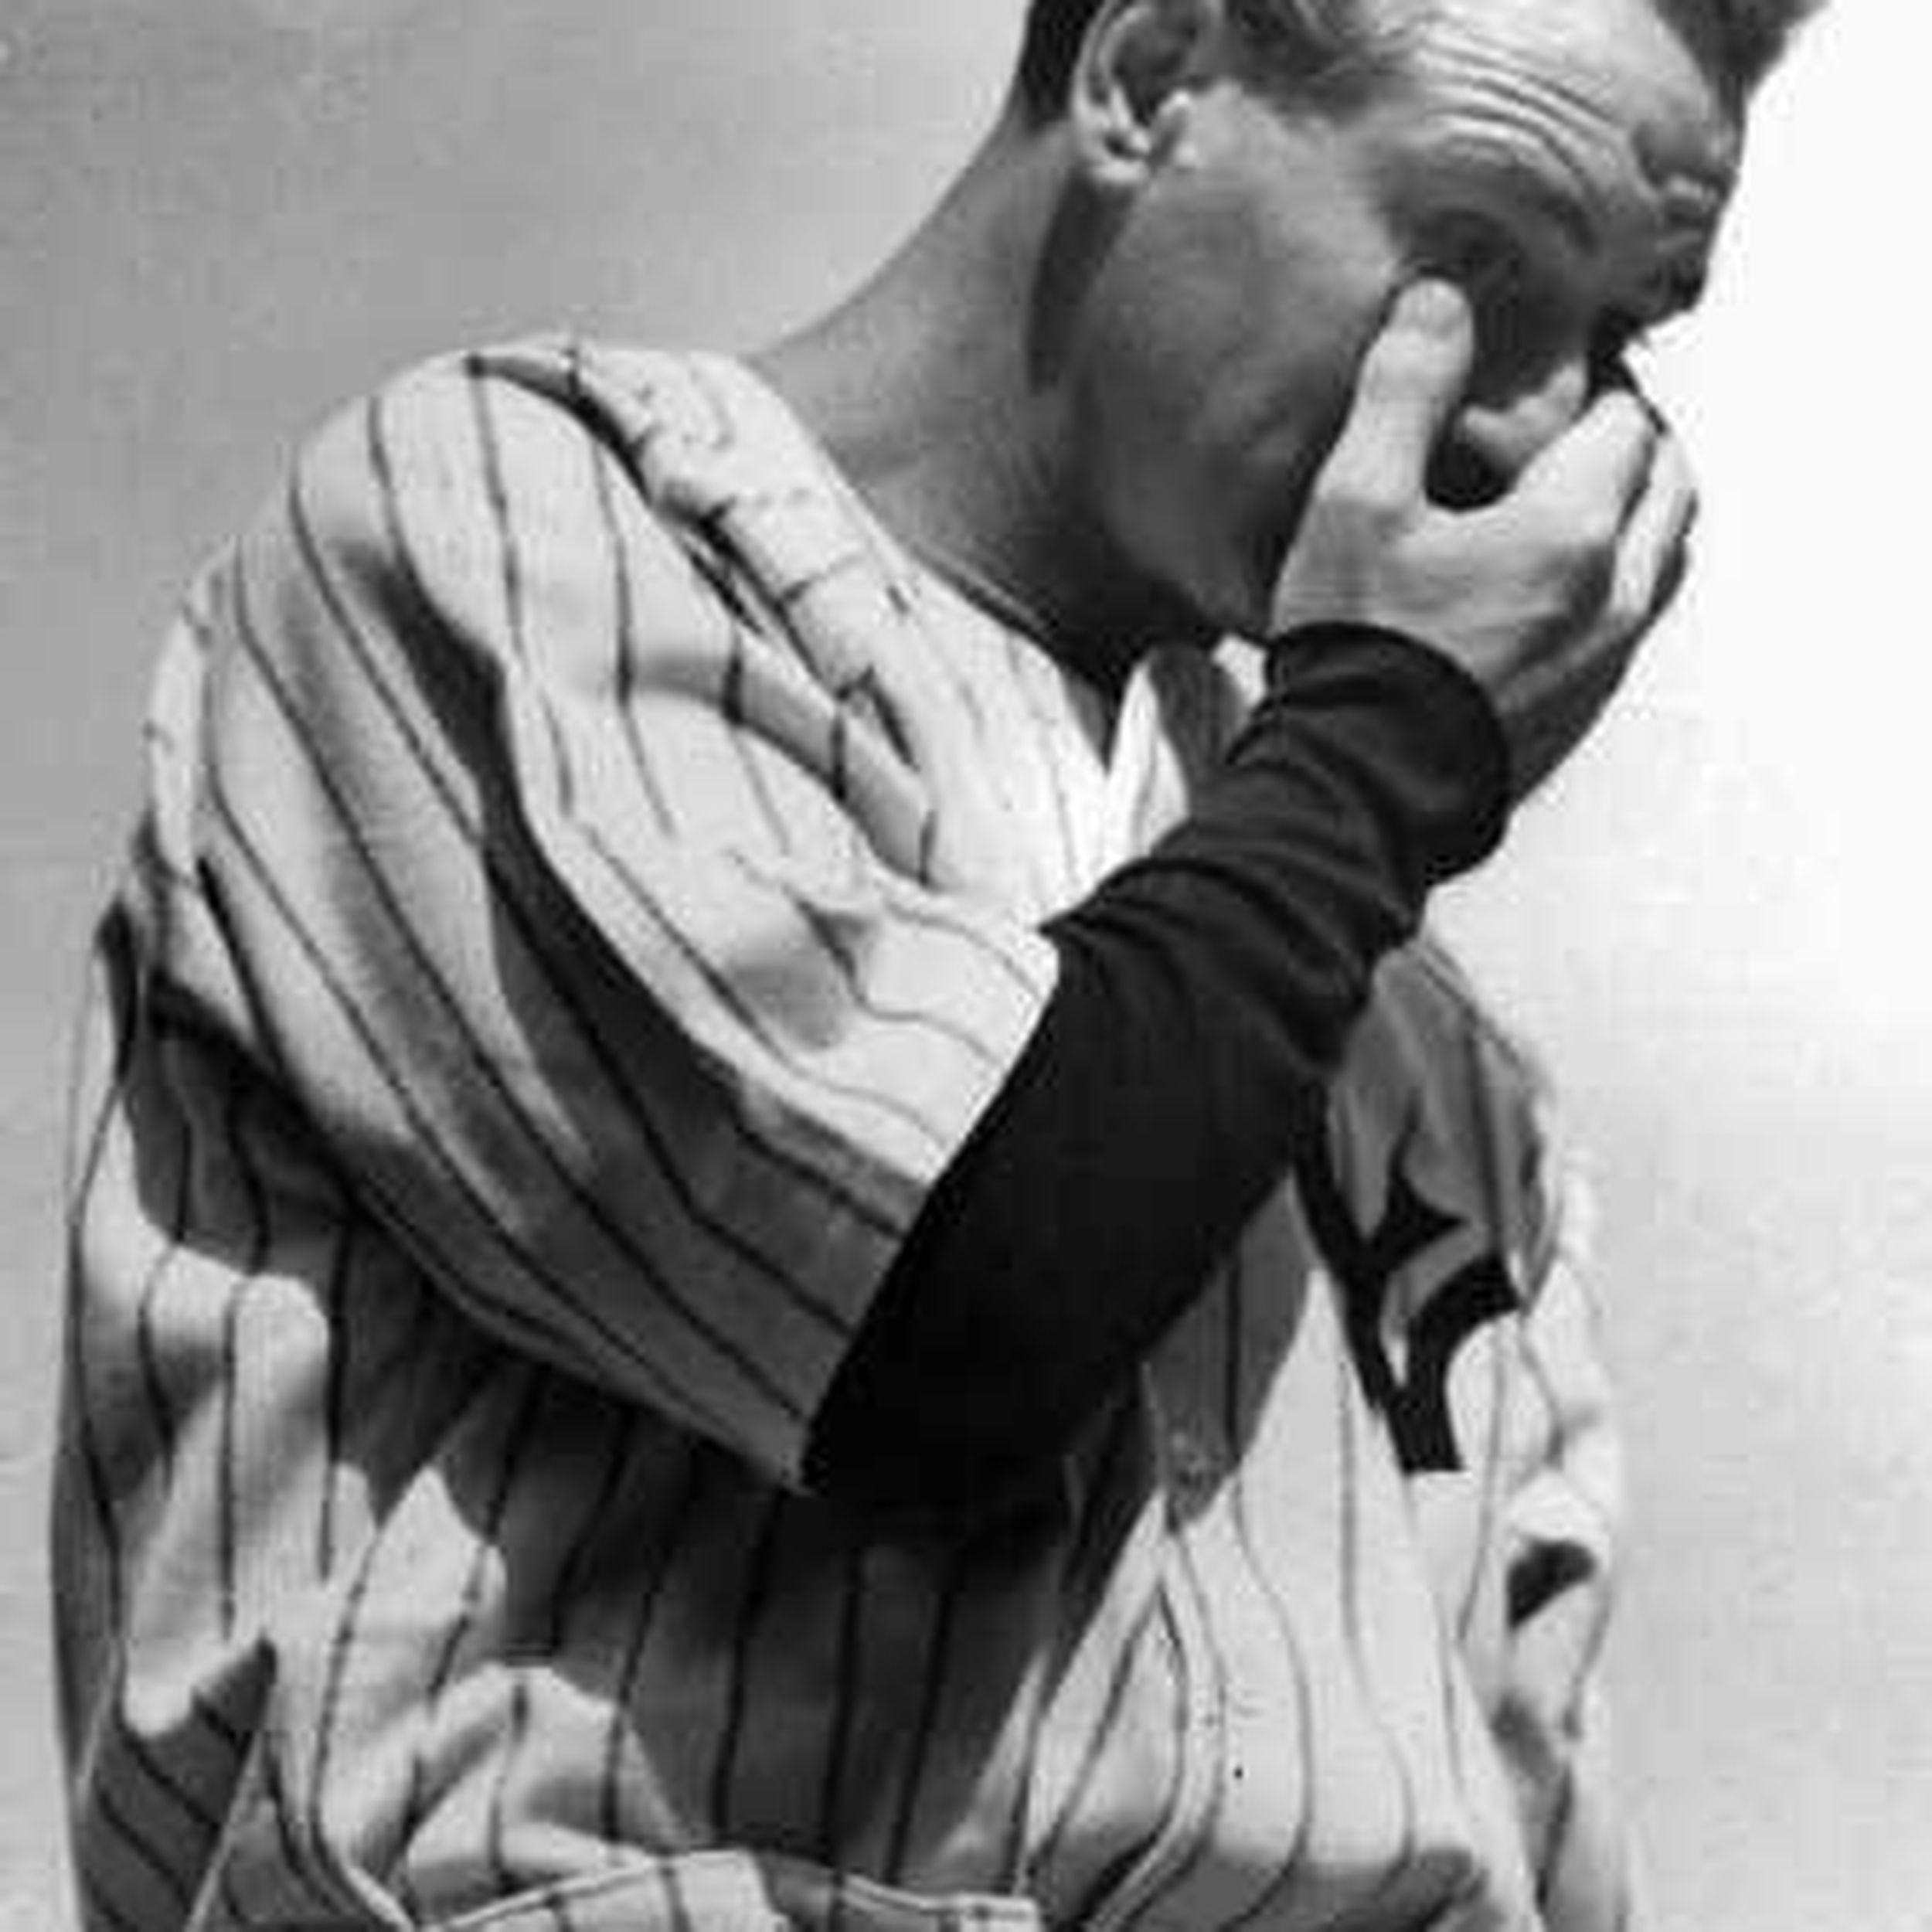 Recalling a Lou Gehrig farewell